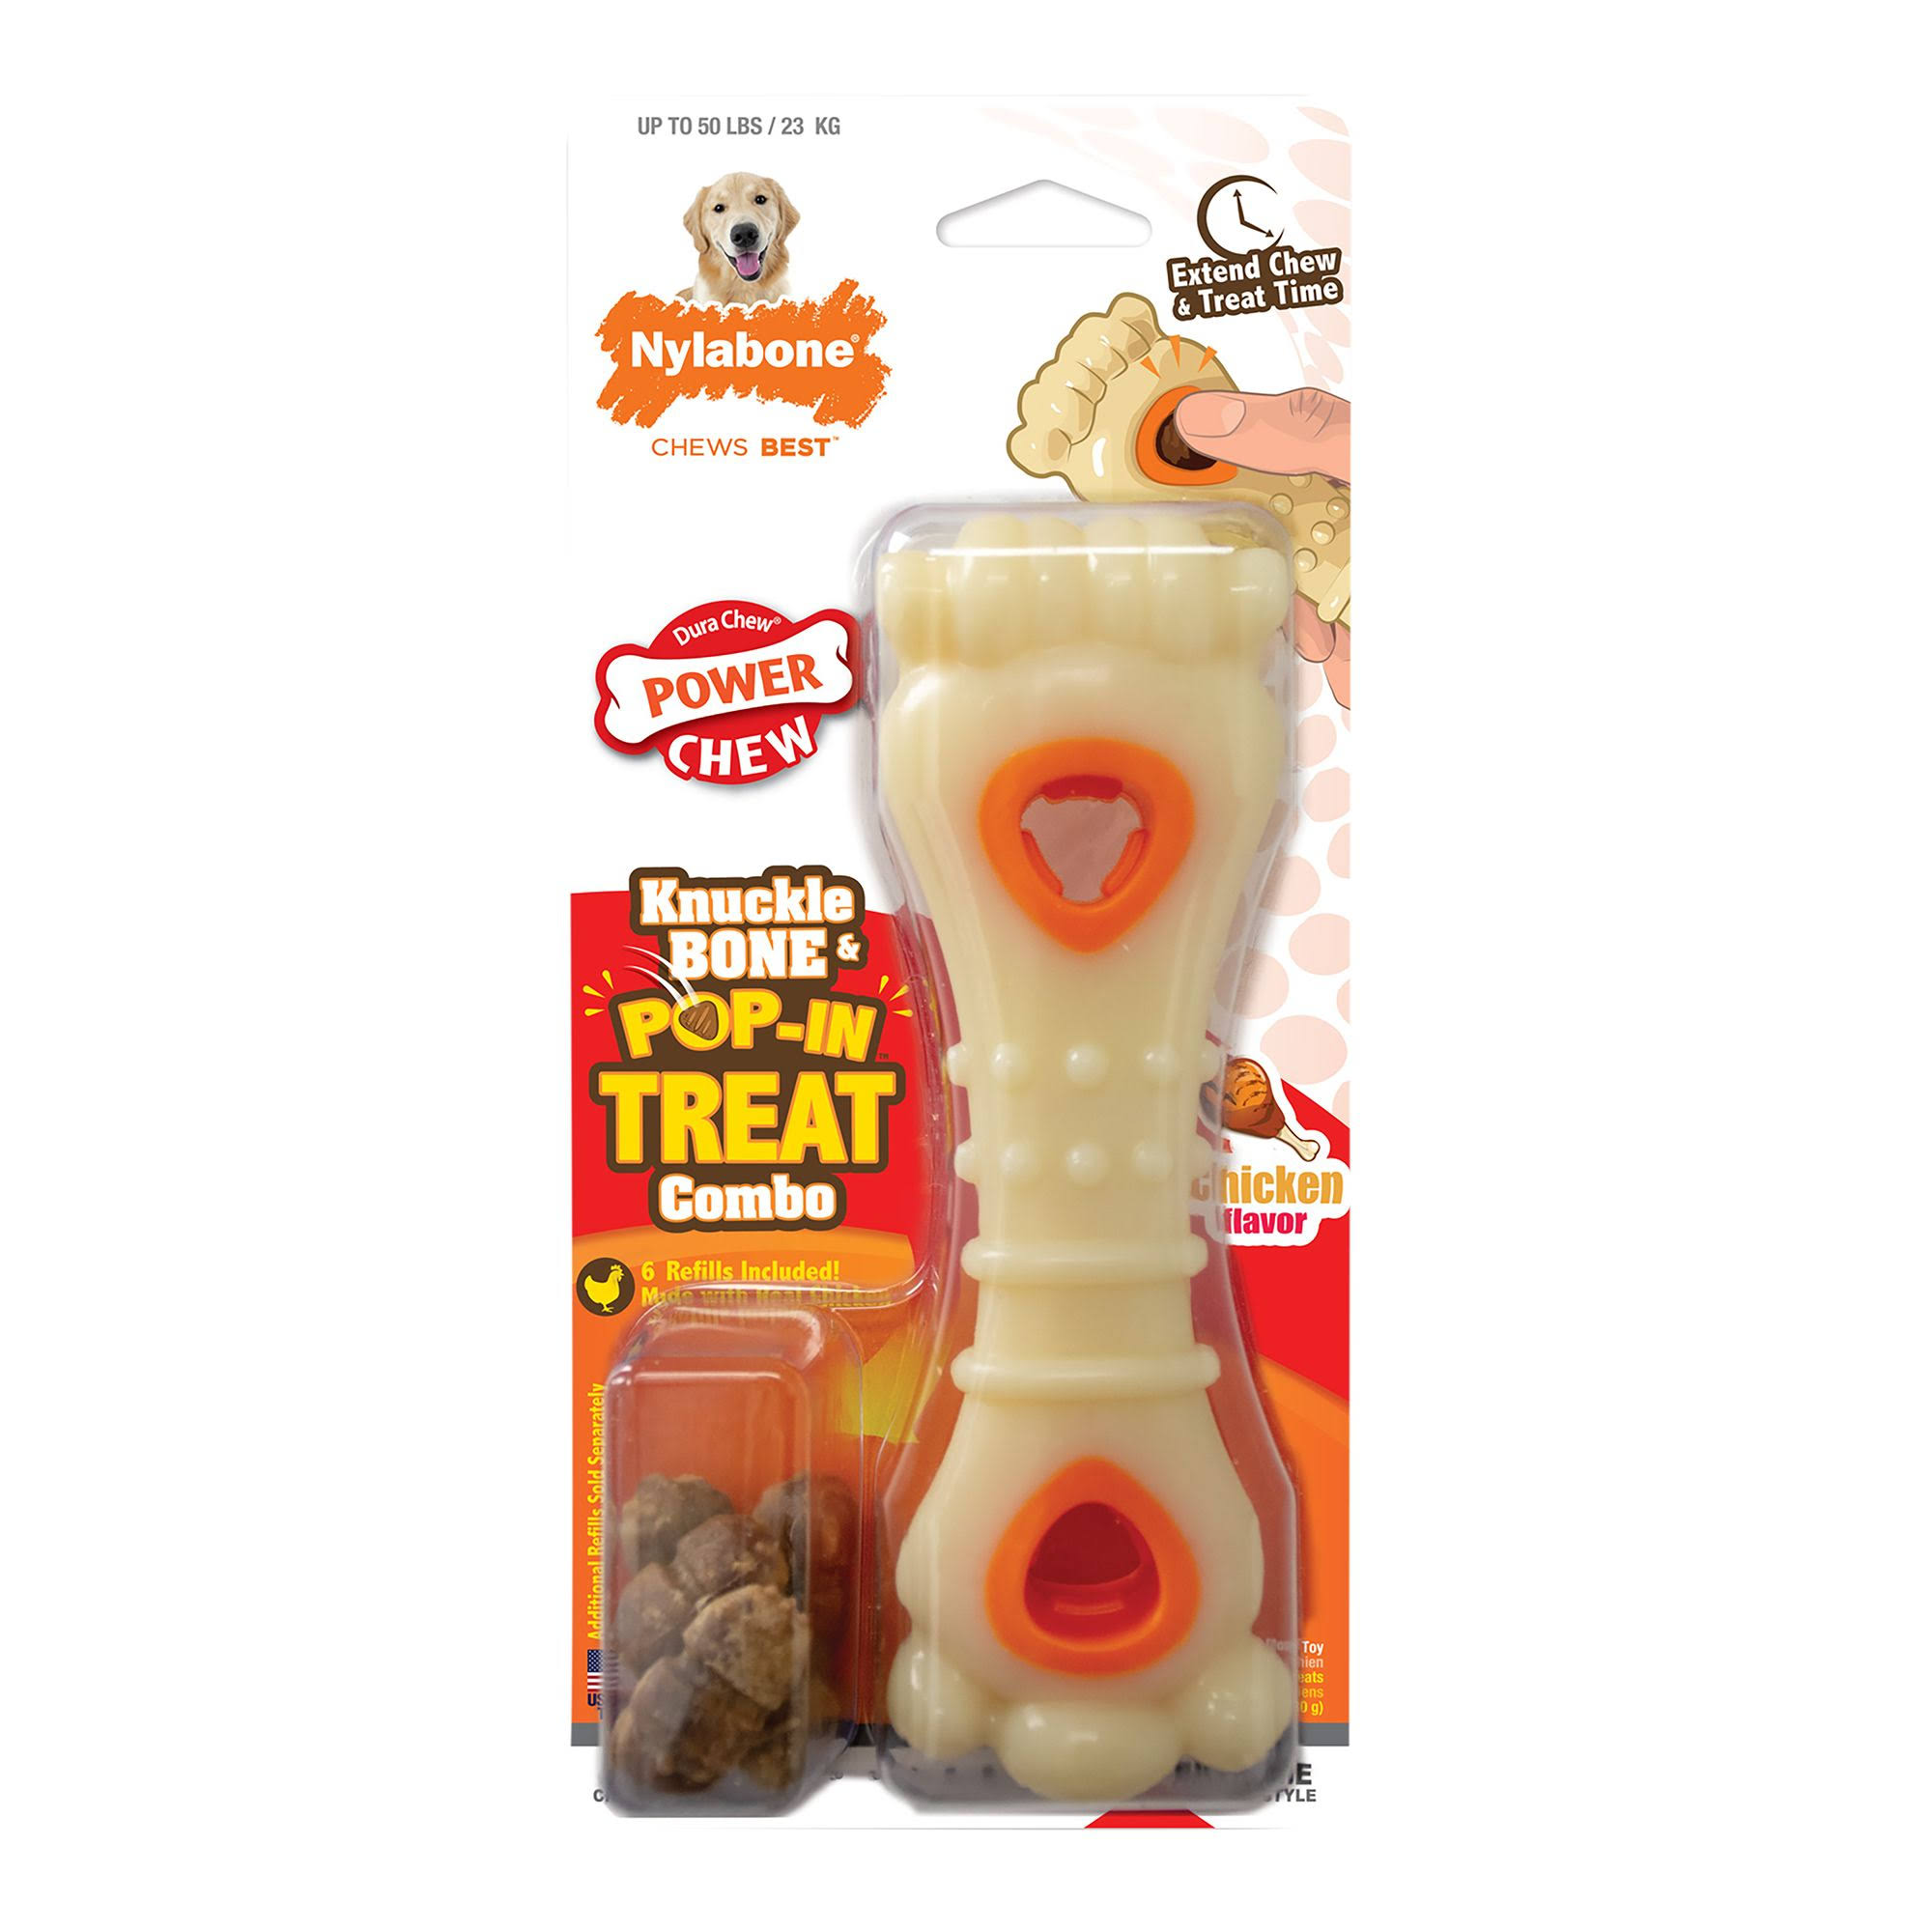 Nylabone DuraChew Power Chew Knuckle Bone and Pop-In Treat Combo Dog Toy - Chicken Flavor, size: Large | PetSmart